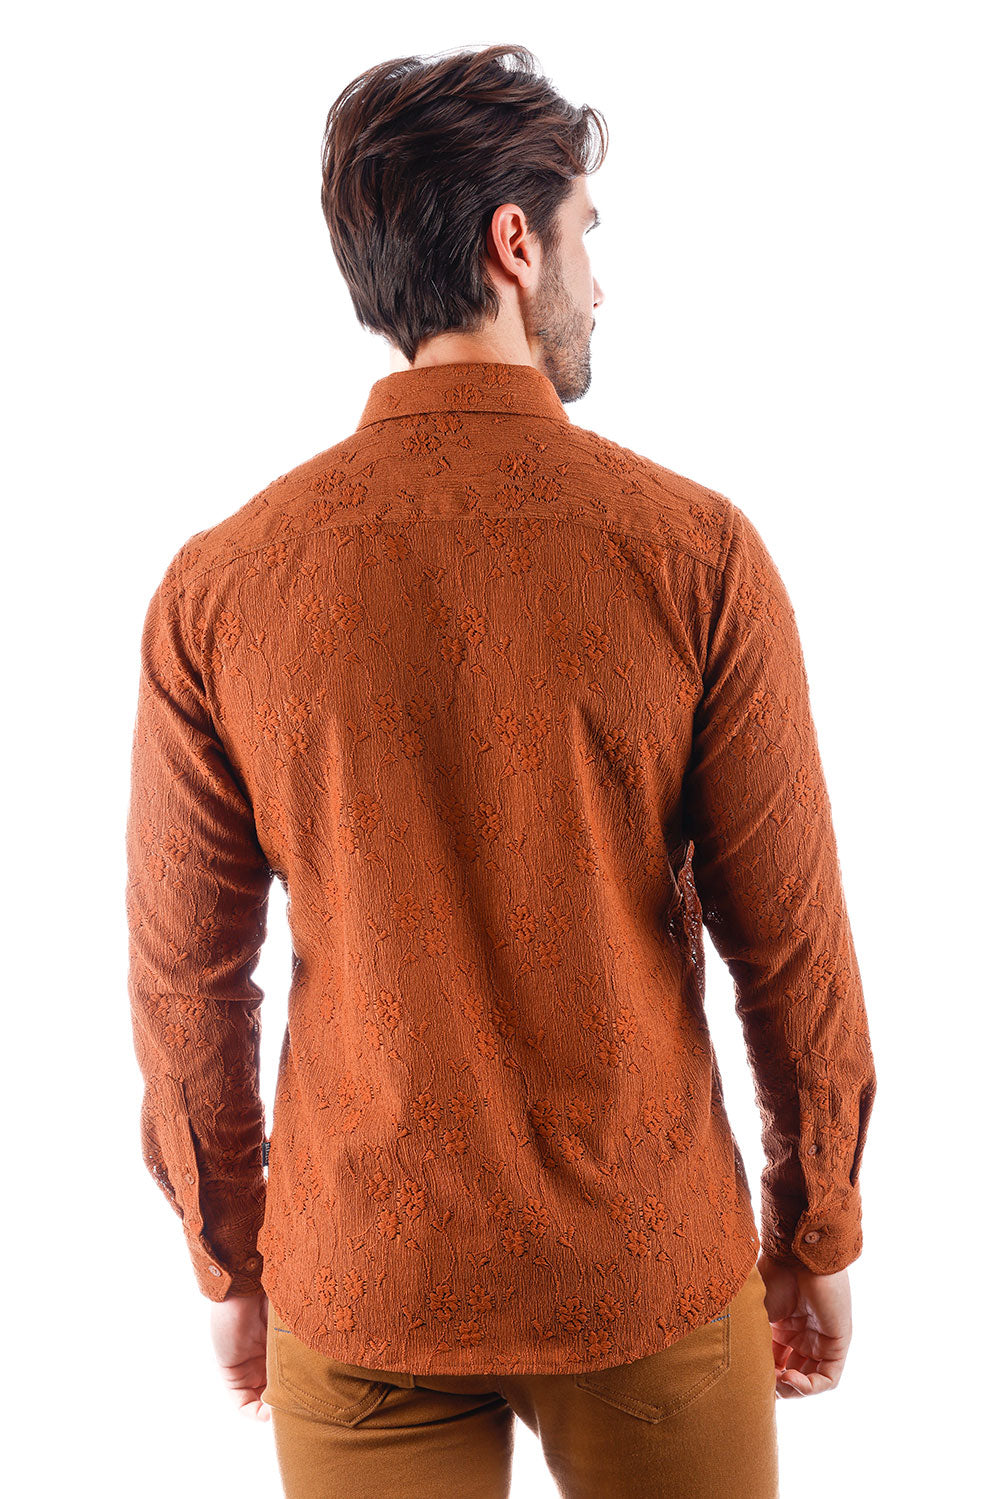 BARABAS Men's Lace See Through Stretch Sheer Long Sleeve Shirts 3B25 Nutshell